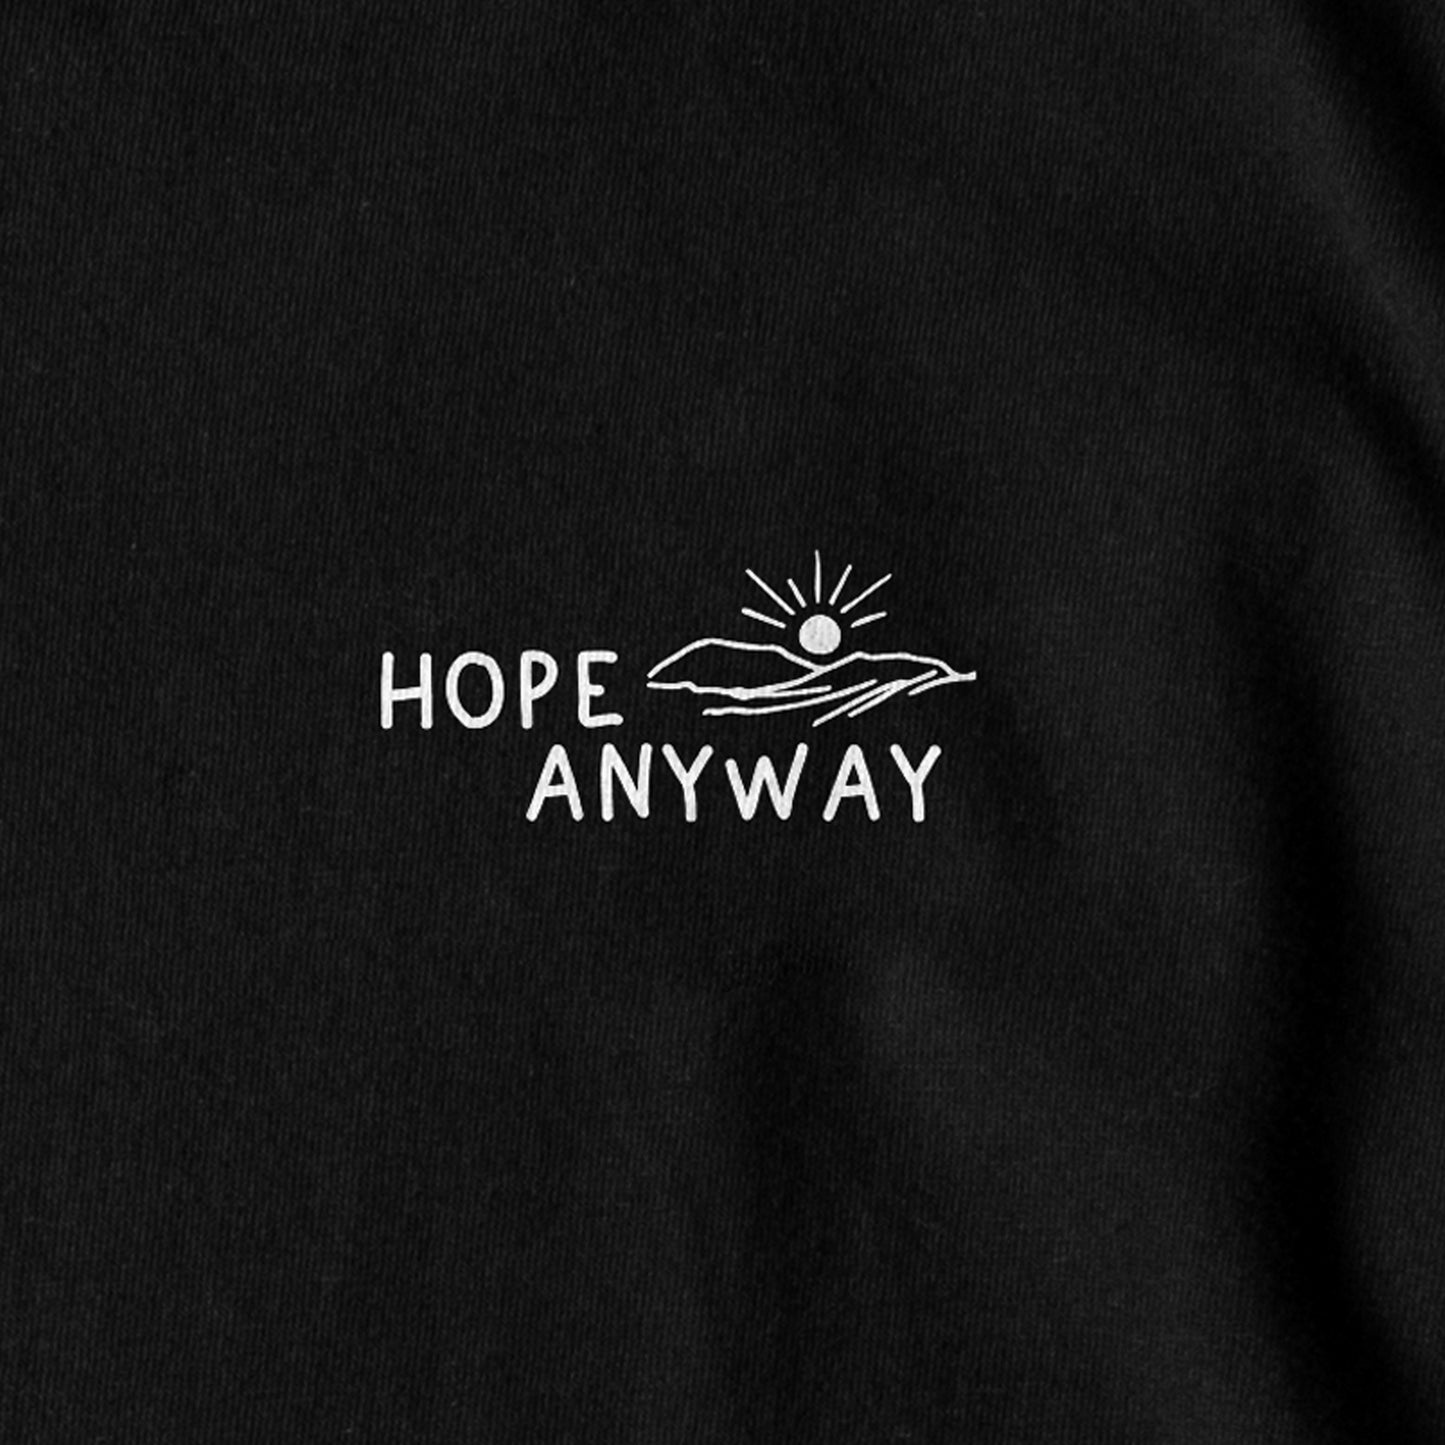 Hope Anyway - Unisex heavyweight t-shirt